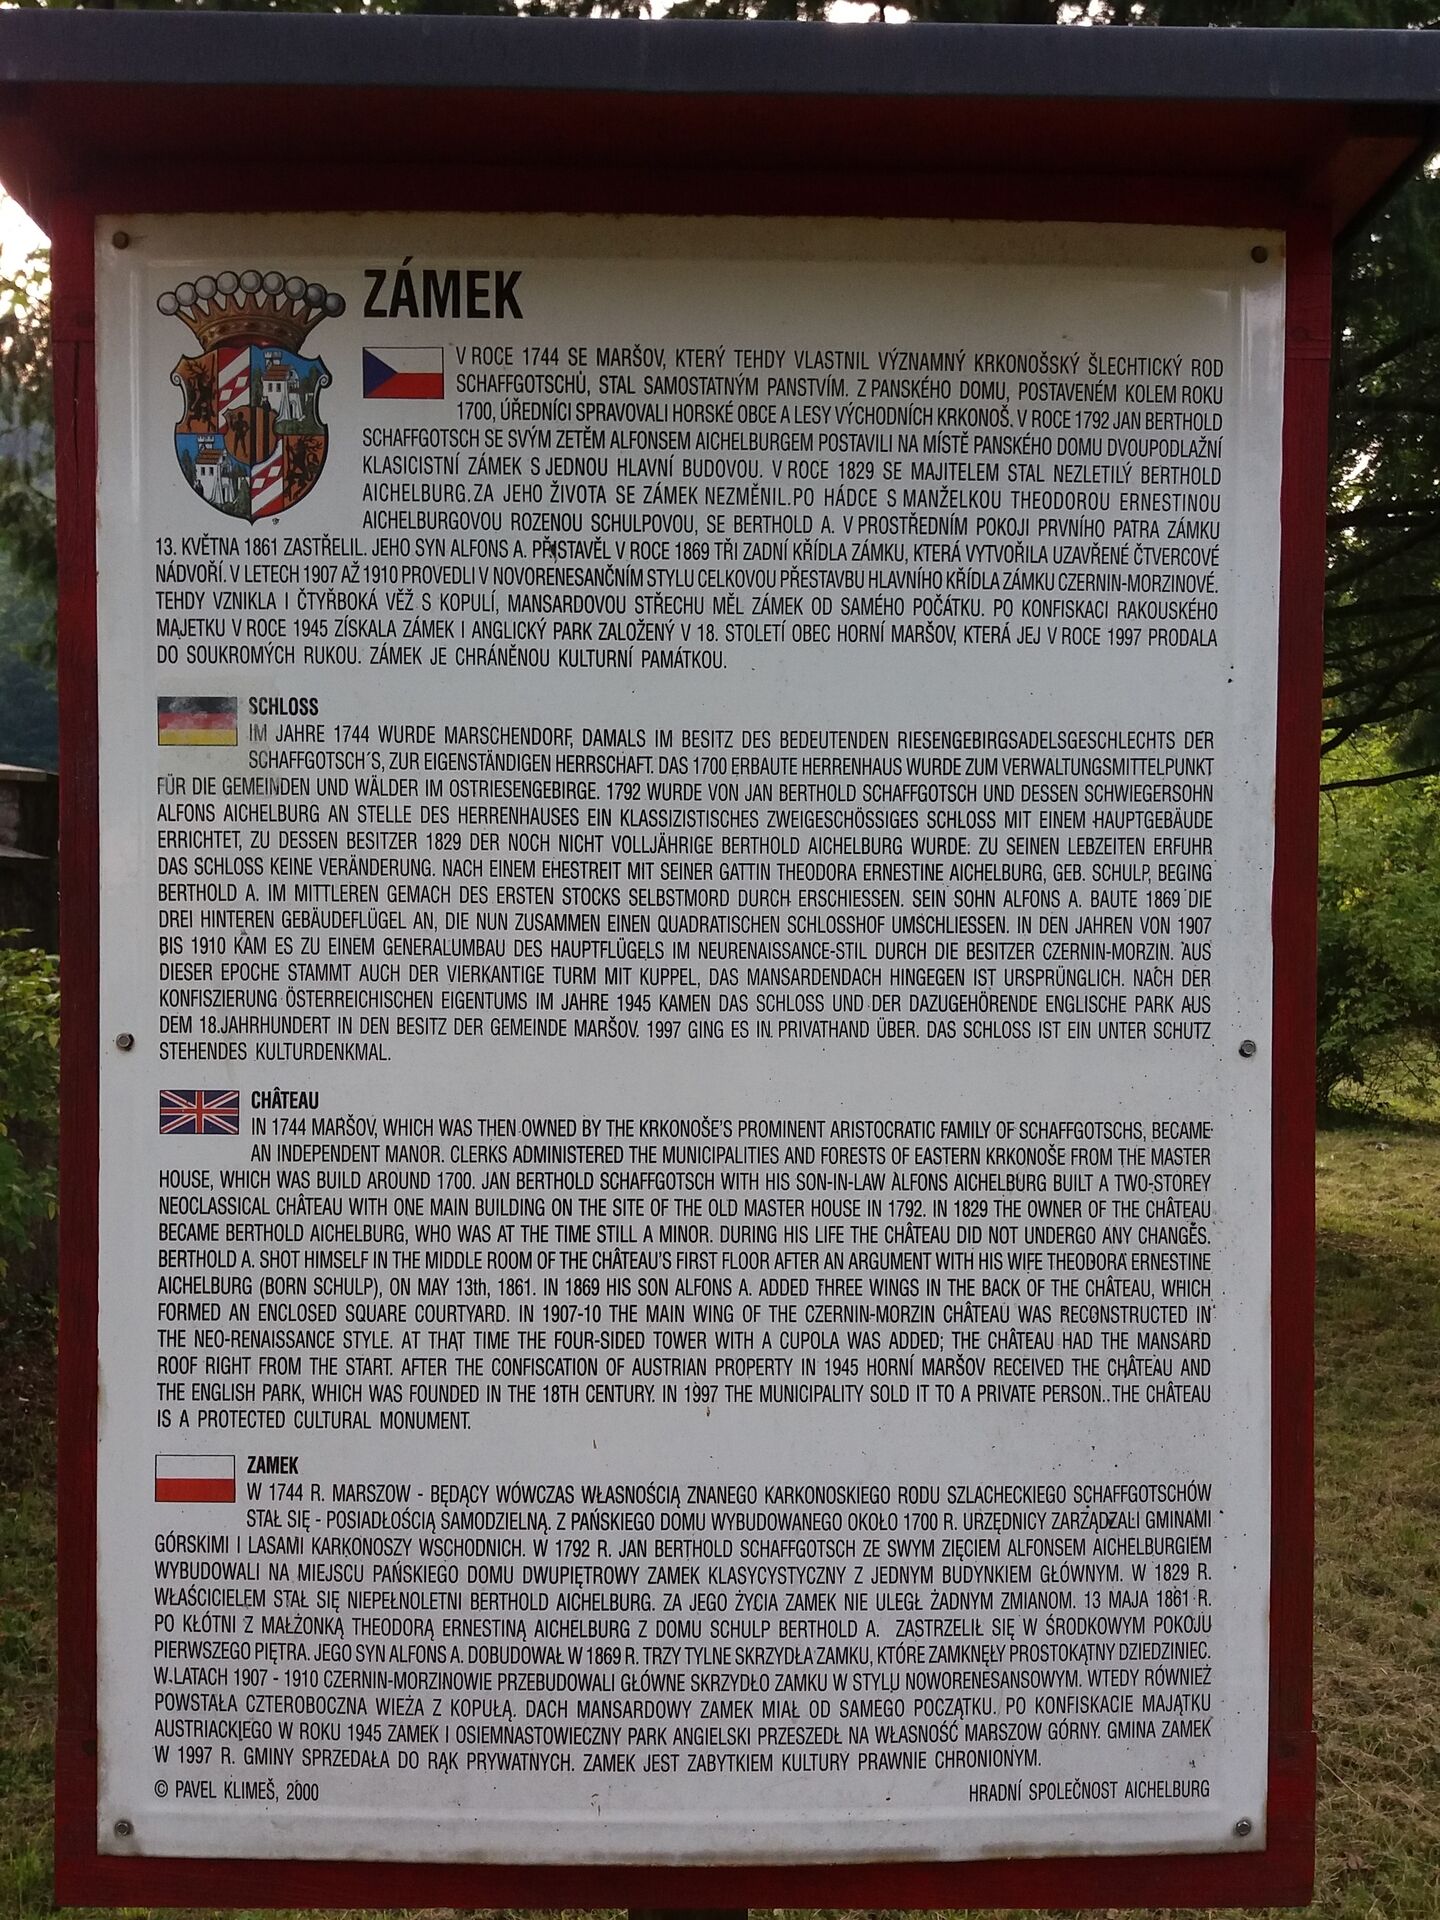 Tablica info. o historii zamku.